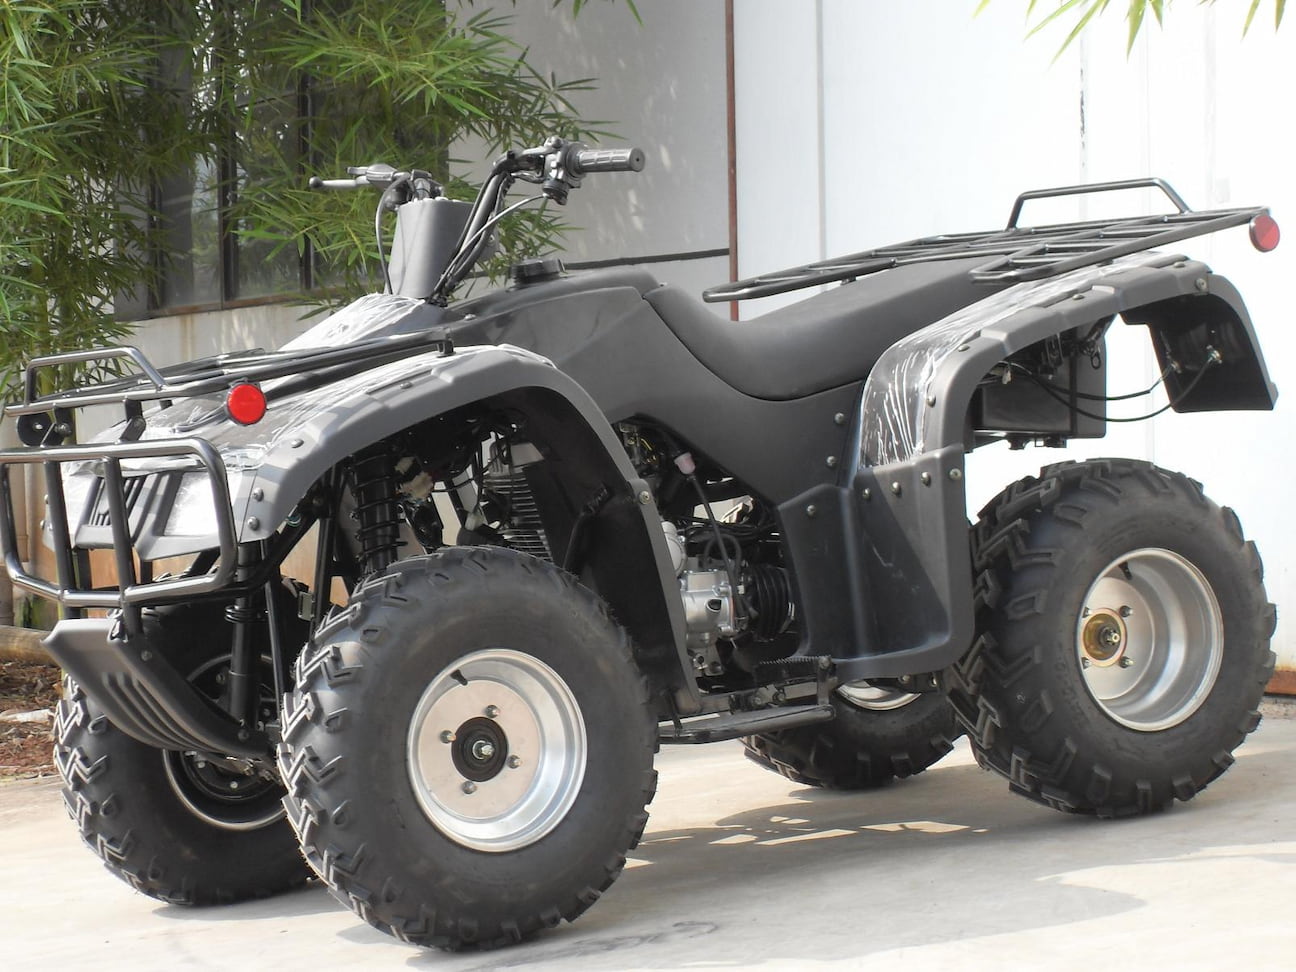 JINLING 250cc Sport ATV Quad Will be Sent to Australia